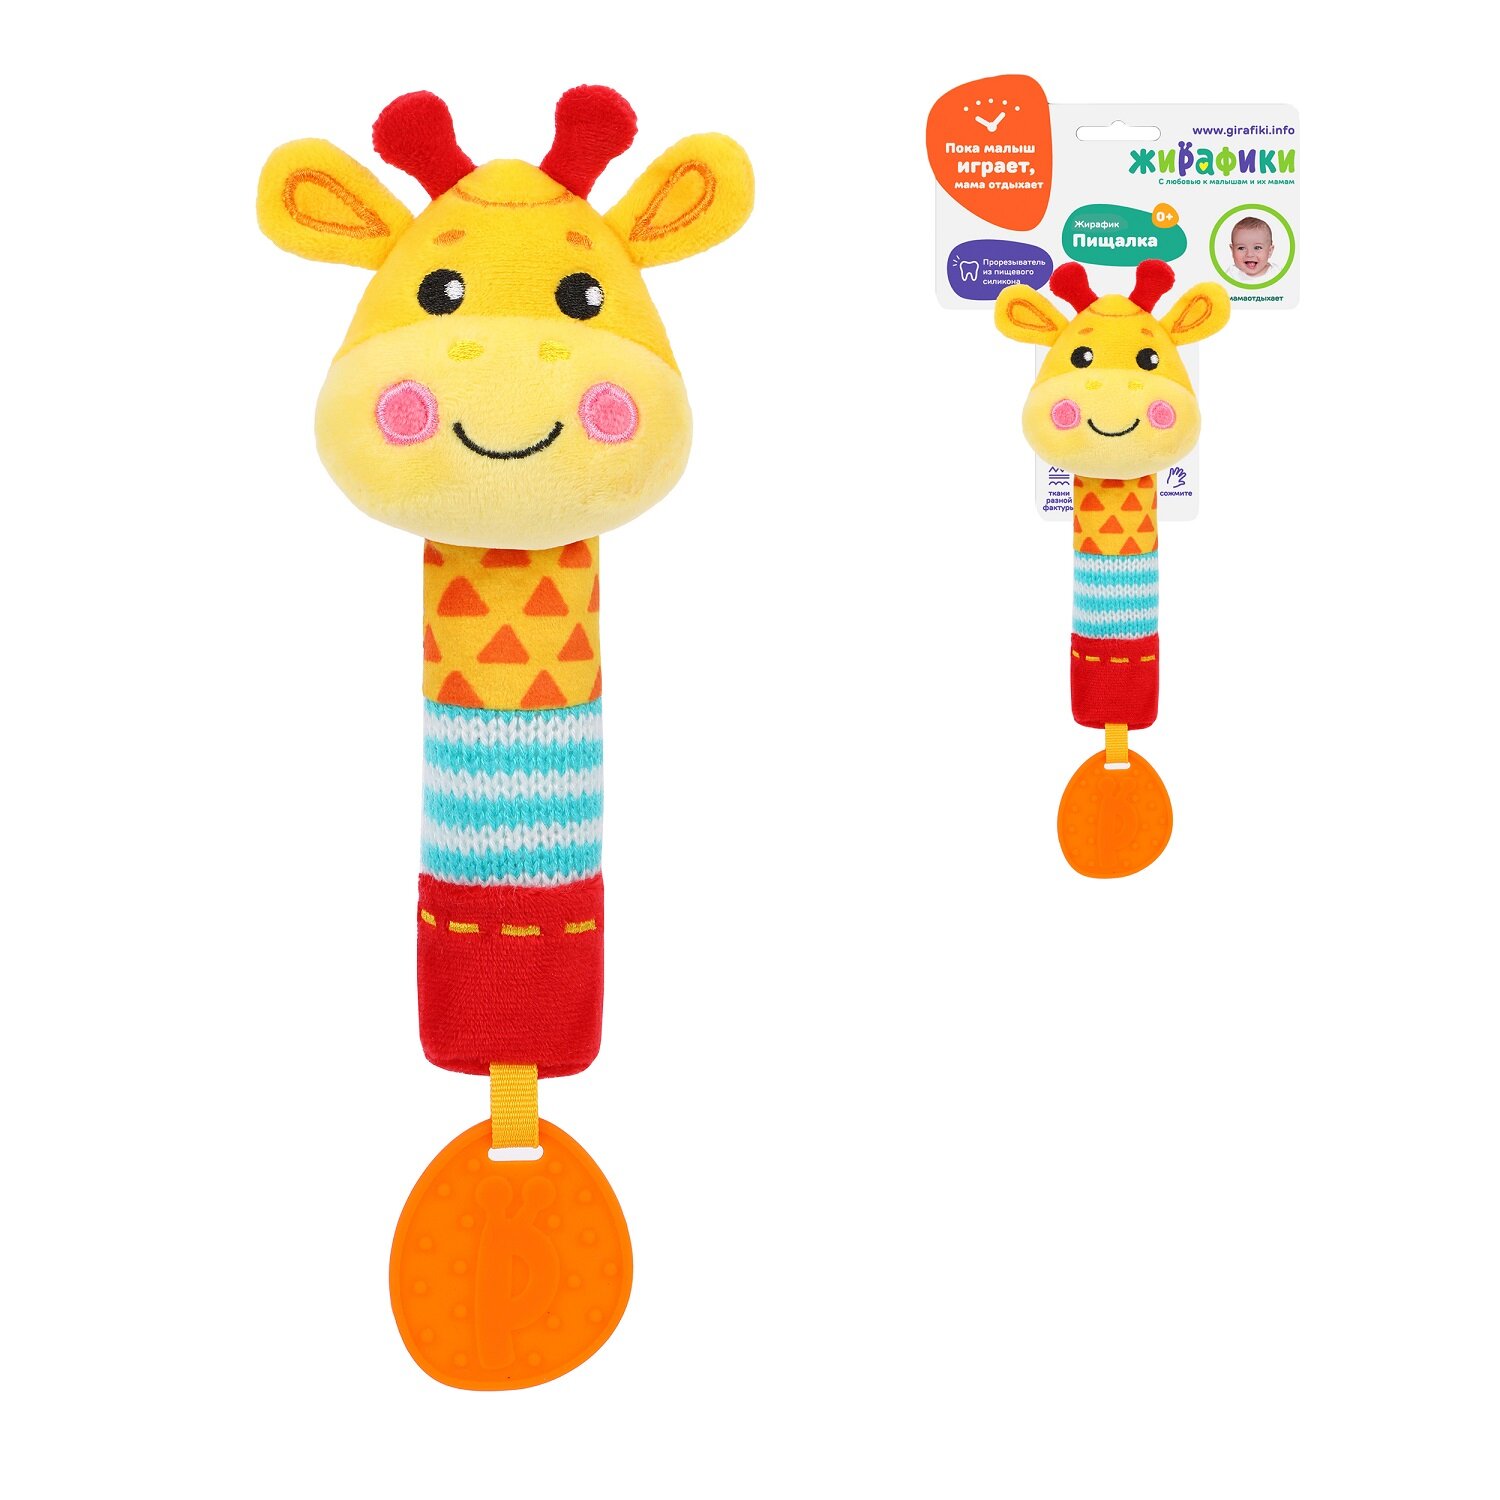 Развивающая игрушка Жирафики - фото №5